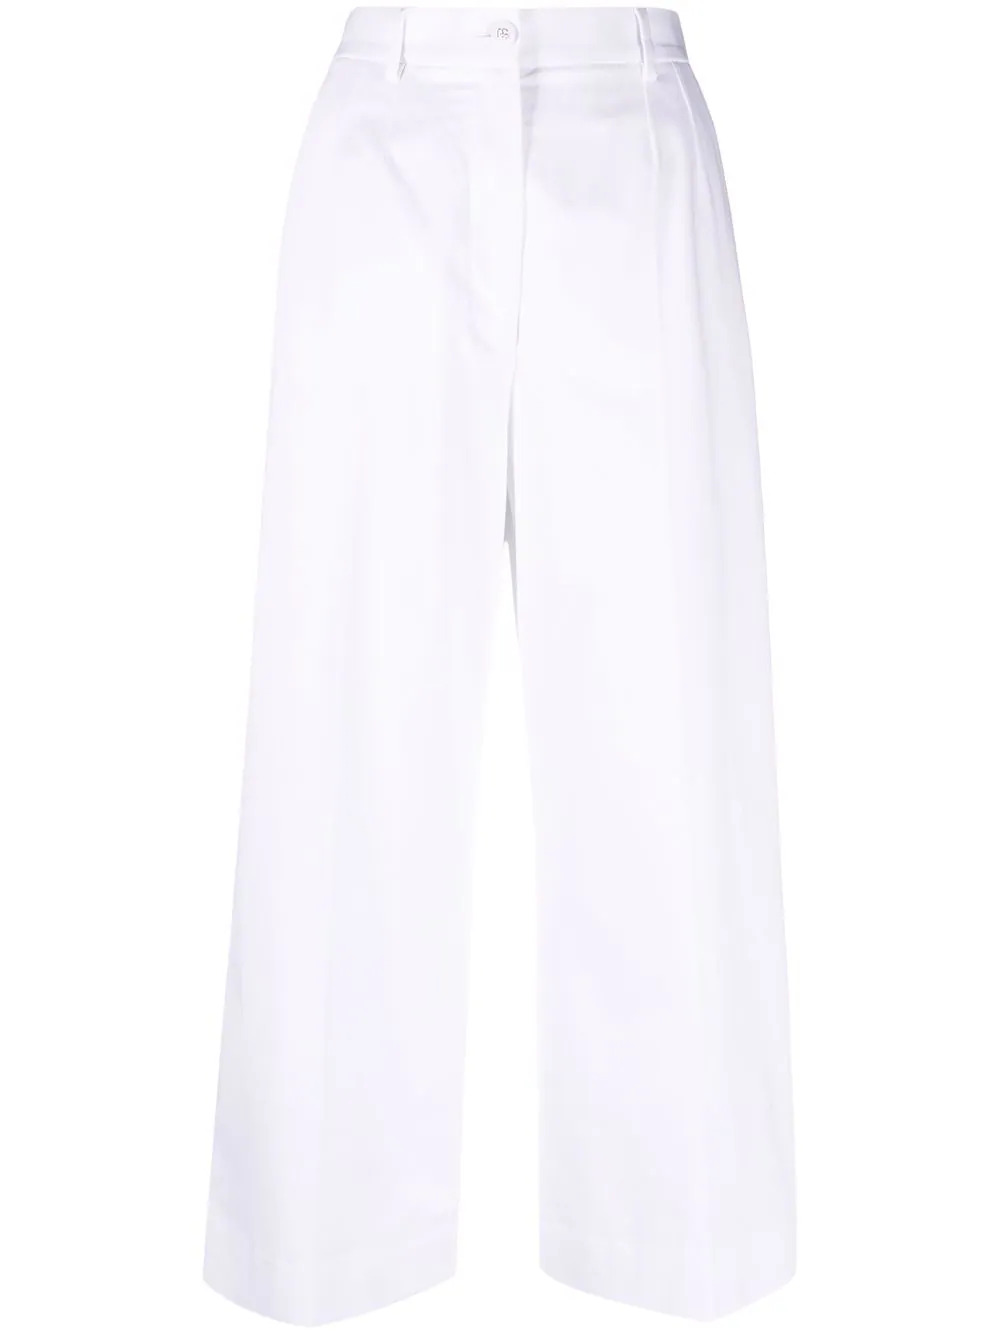 Wide leg pants in white